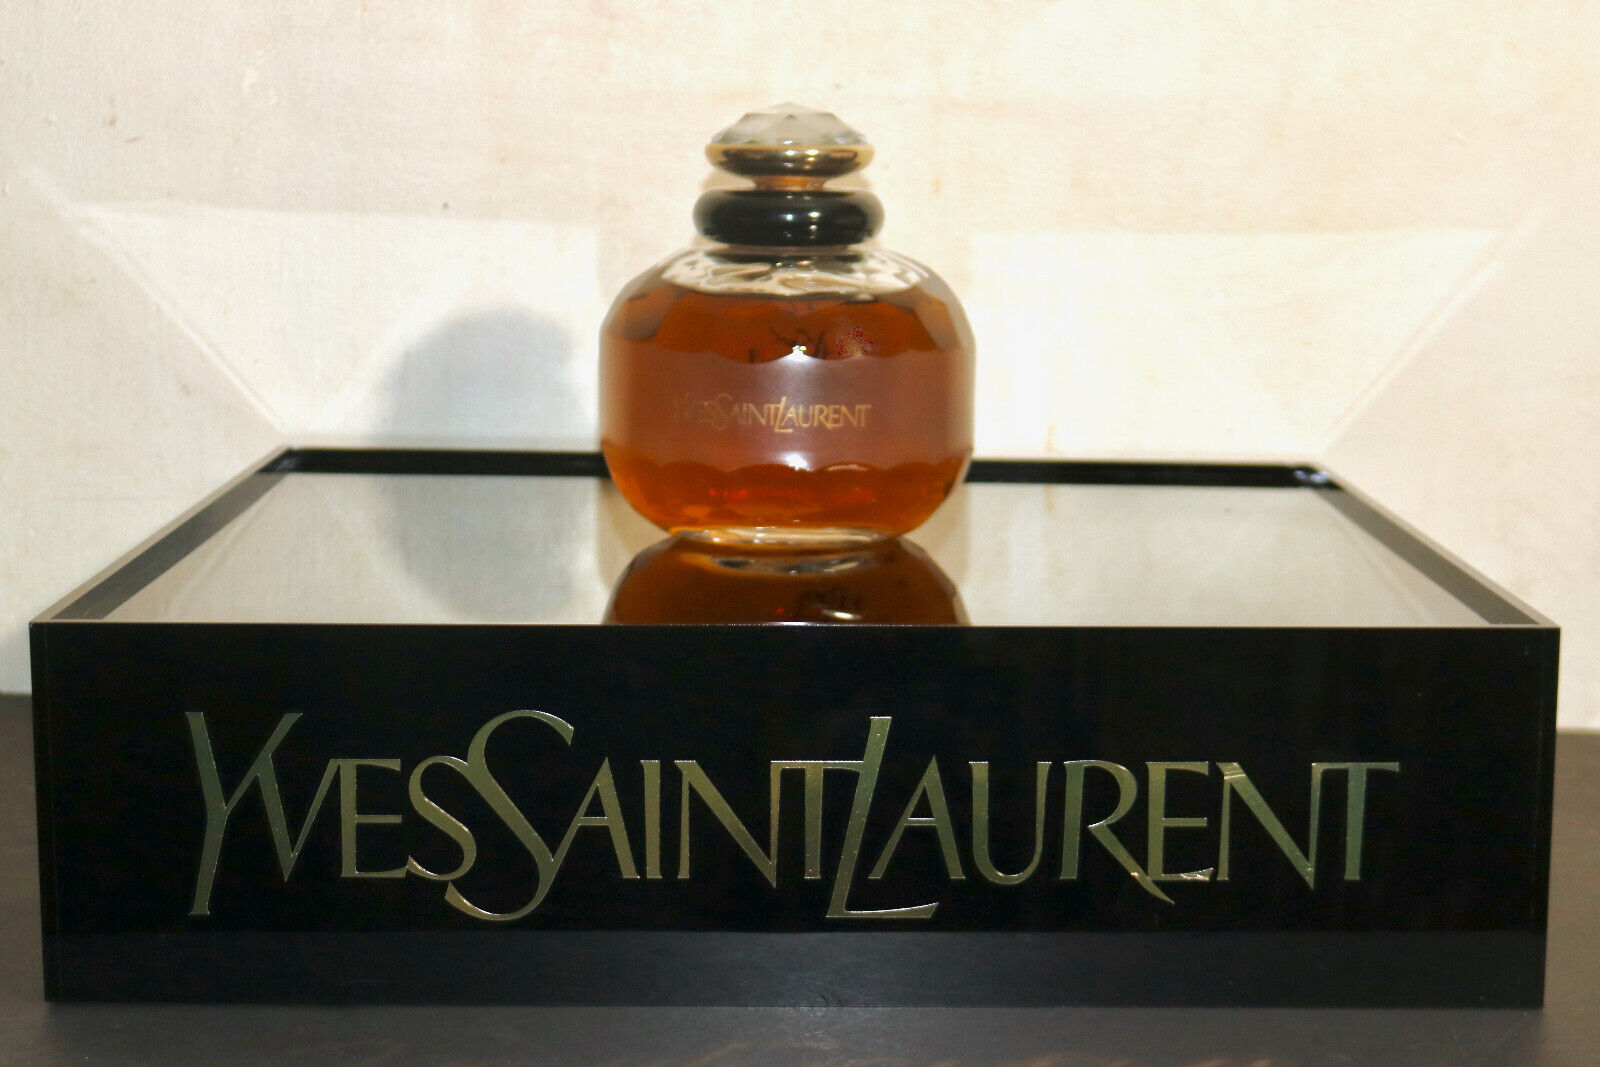 Giant YSL PARIS YVES SAINT LAURENT Factice Dummy Perfume Bottle display box 